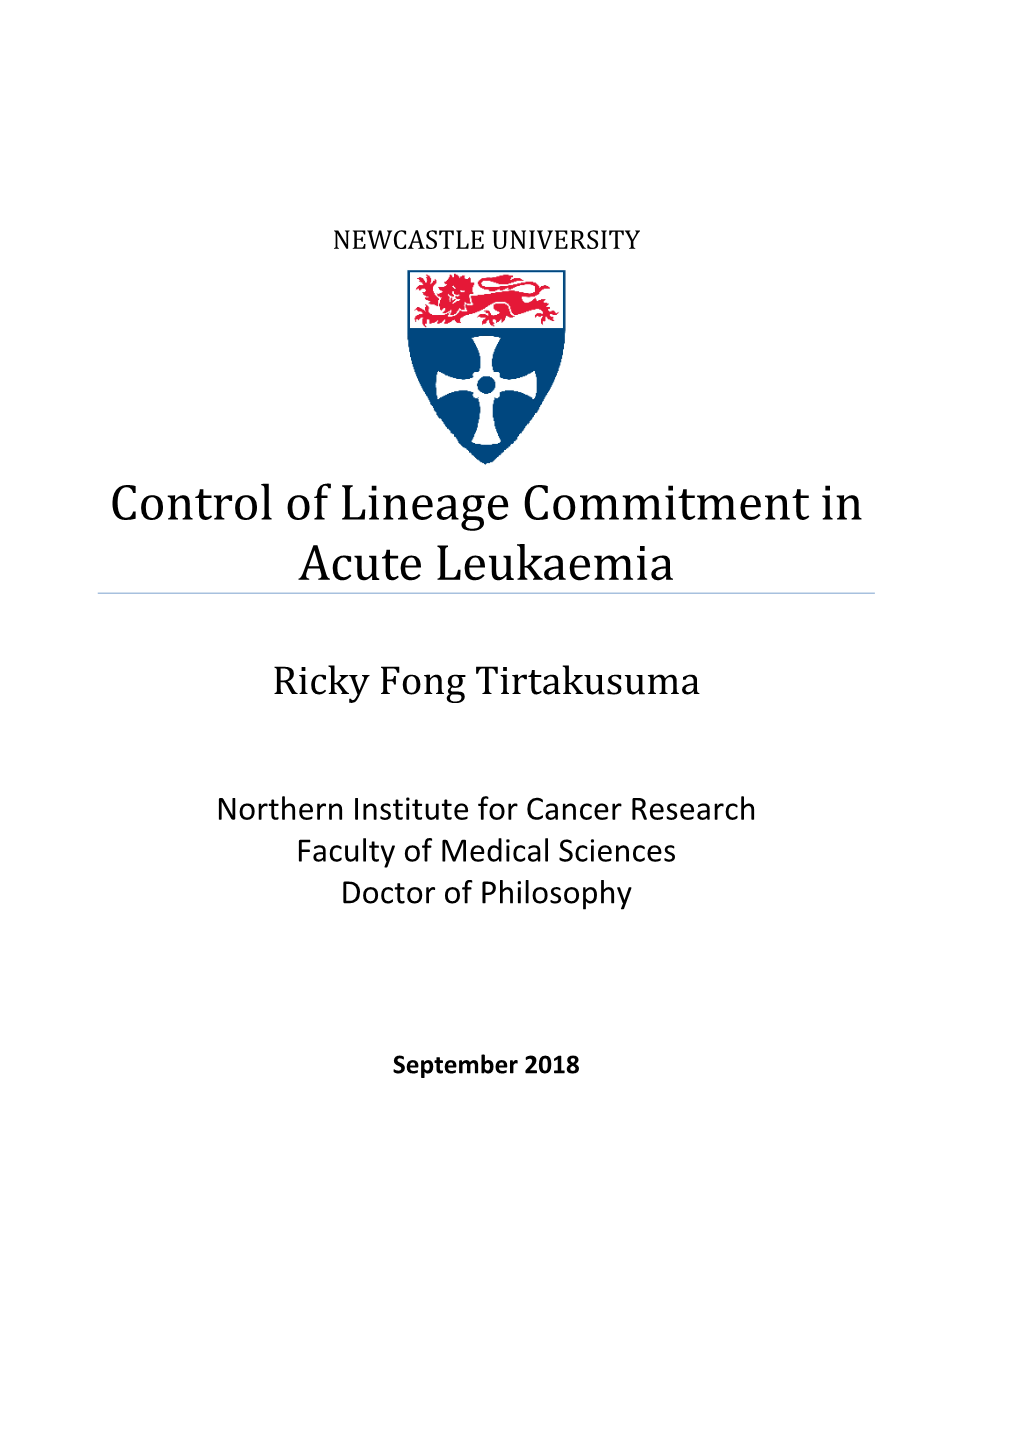 Control of Lineage Commitment in Acute Leukaemia